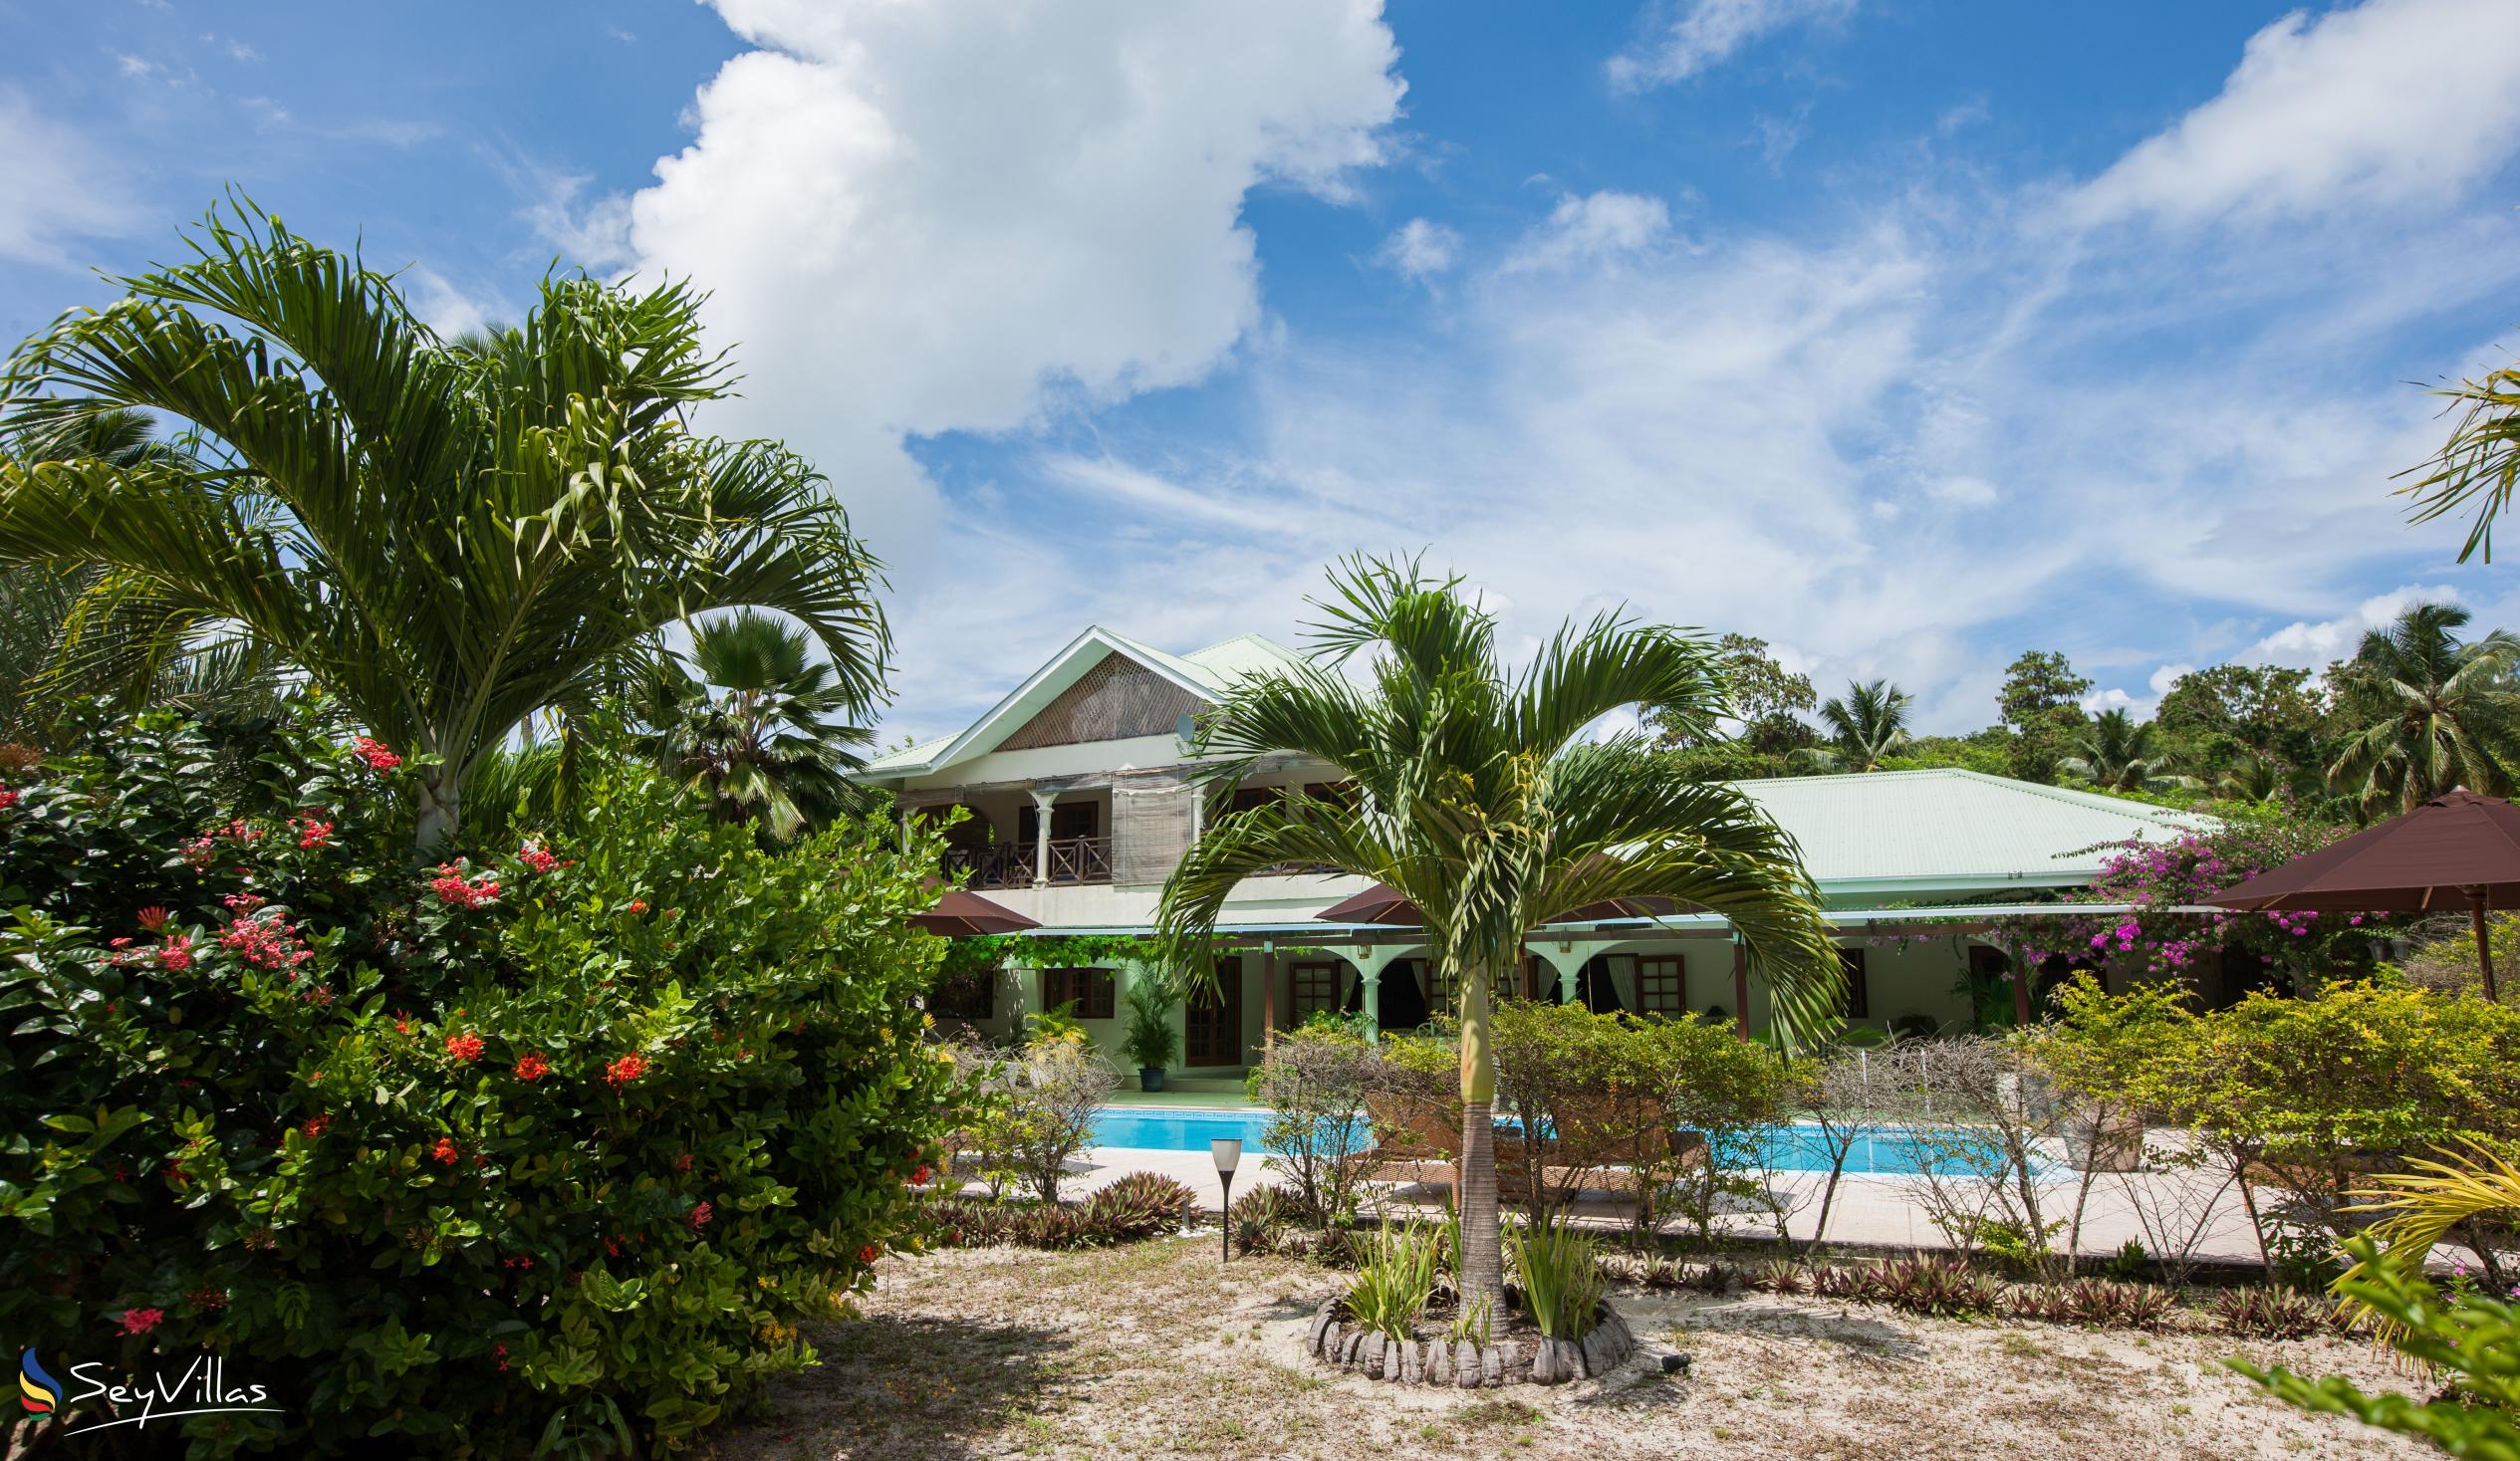 Photo 10: Villa de Cerf - Outdoor area - Cerf Island (Seychelles)